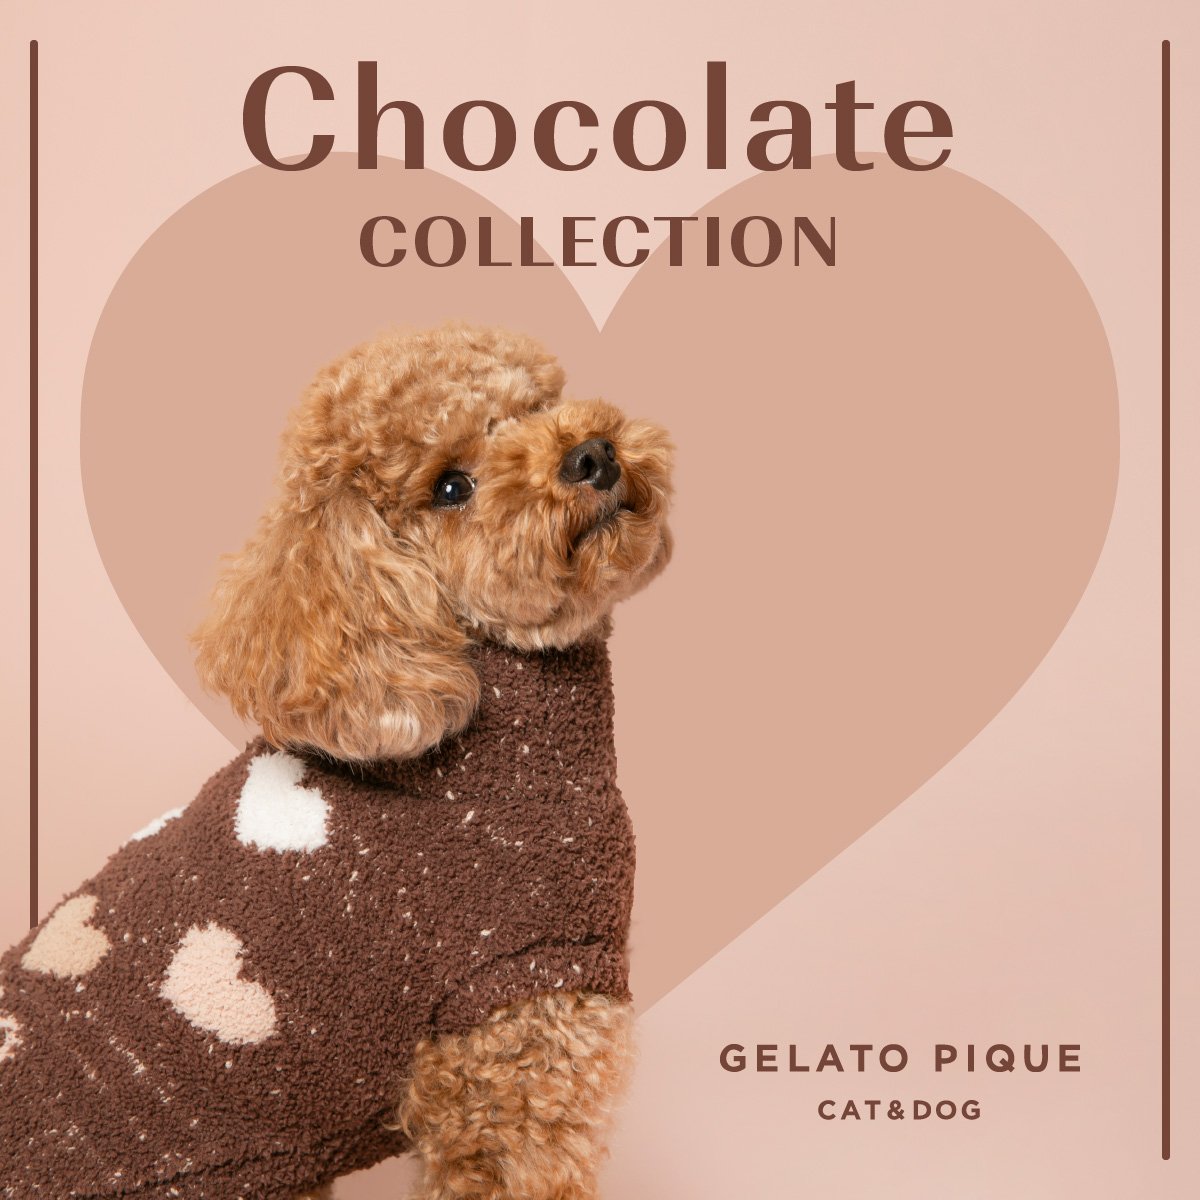 Chocolate COLLECTION GELATO PIQUE CAT&DOG